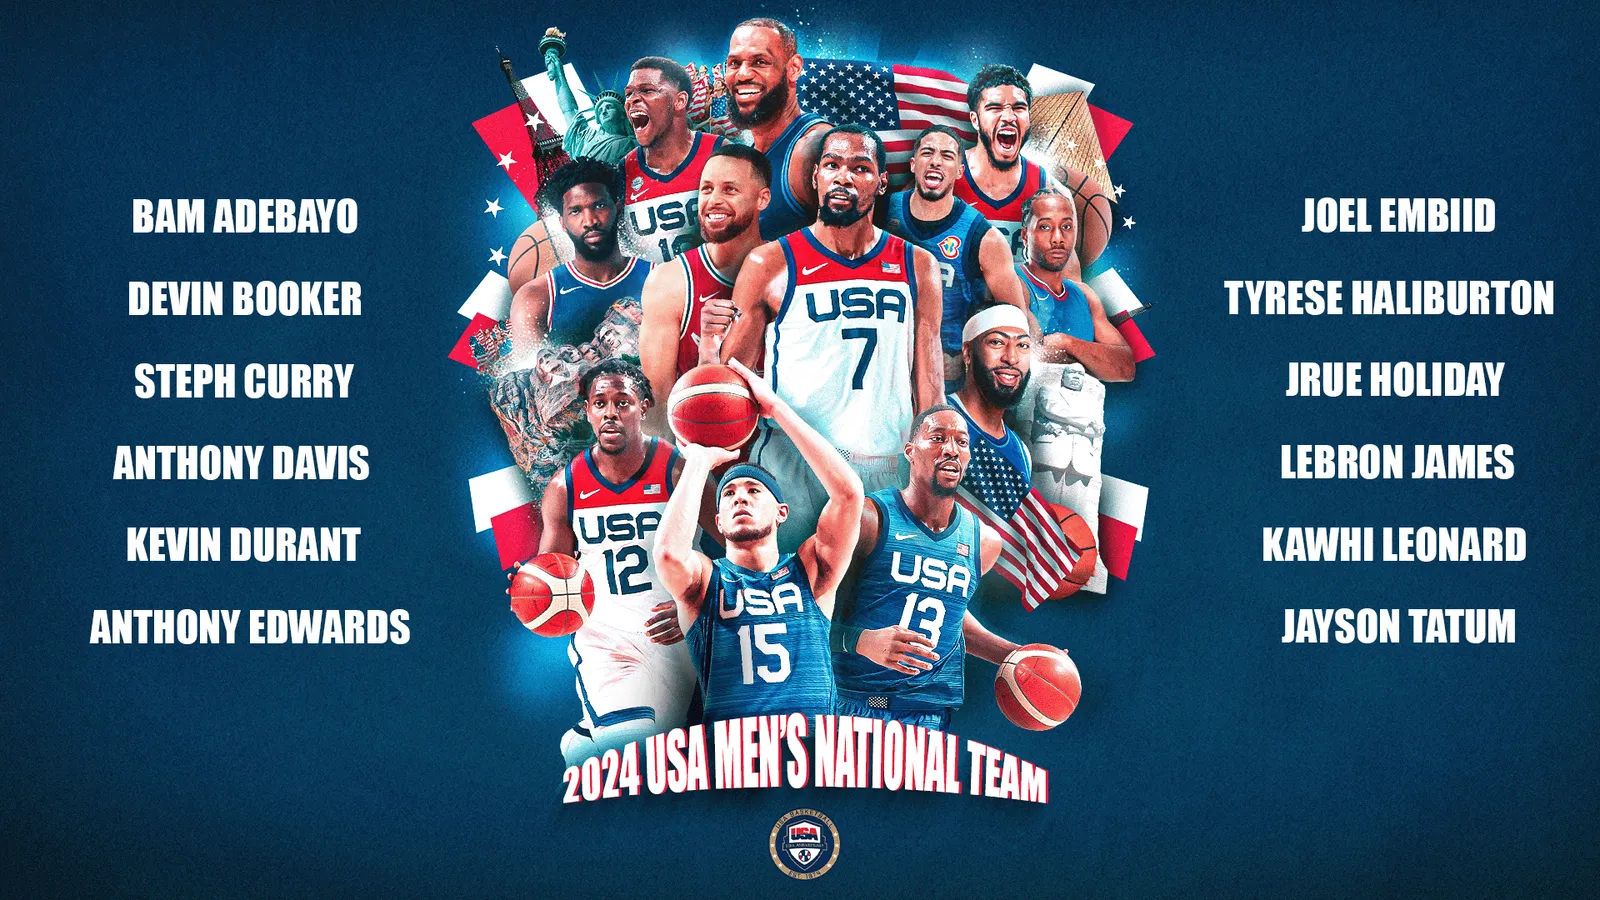 Team USA Basketball for Olympics playing in Abu Dhabi 2024 July